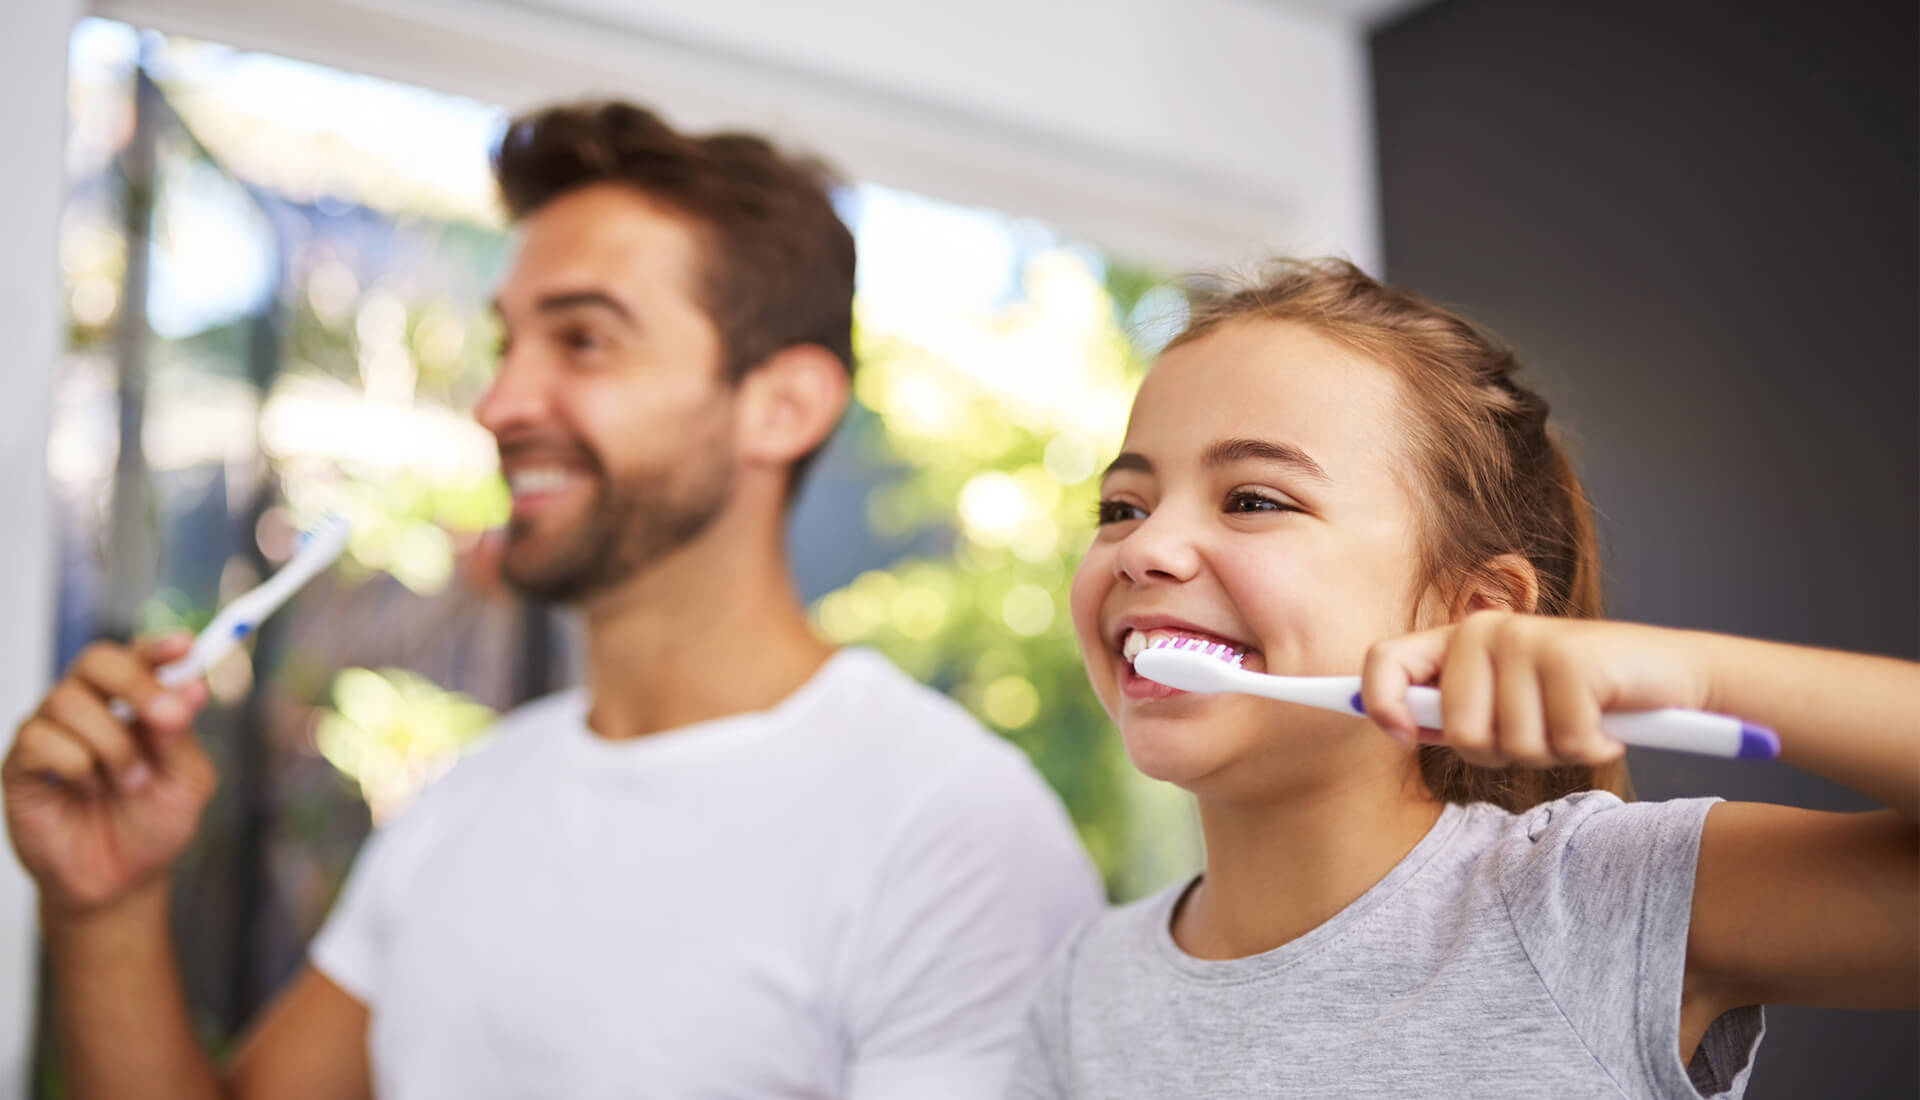 dad-and-daughter-brushing-teeth